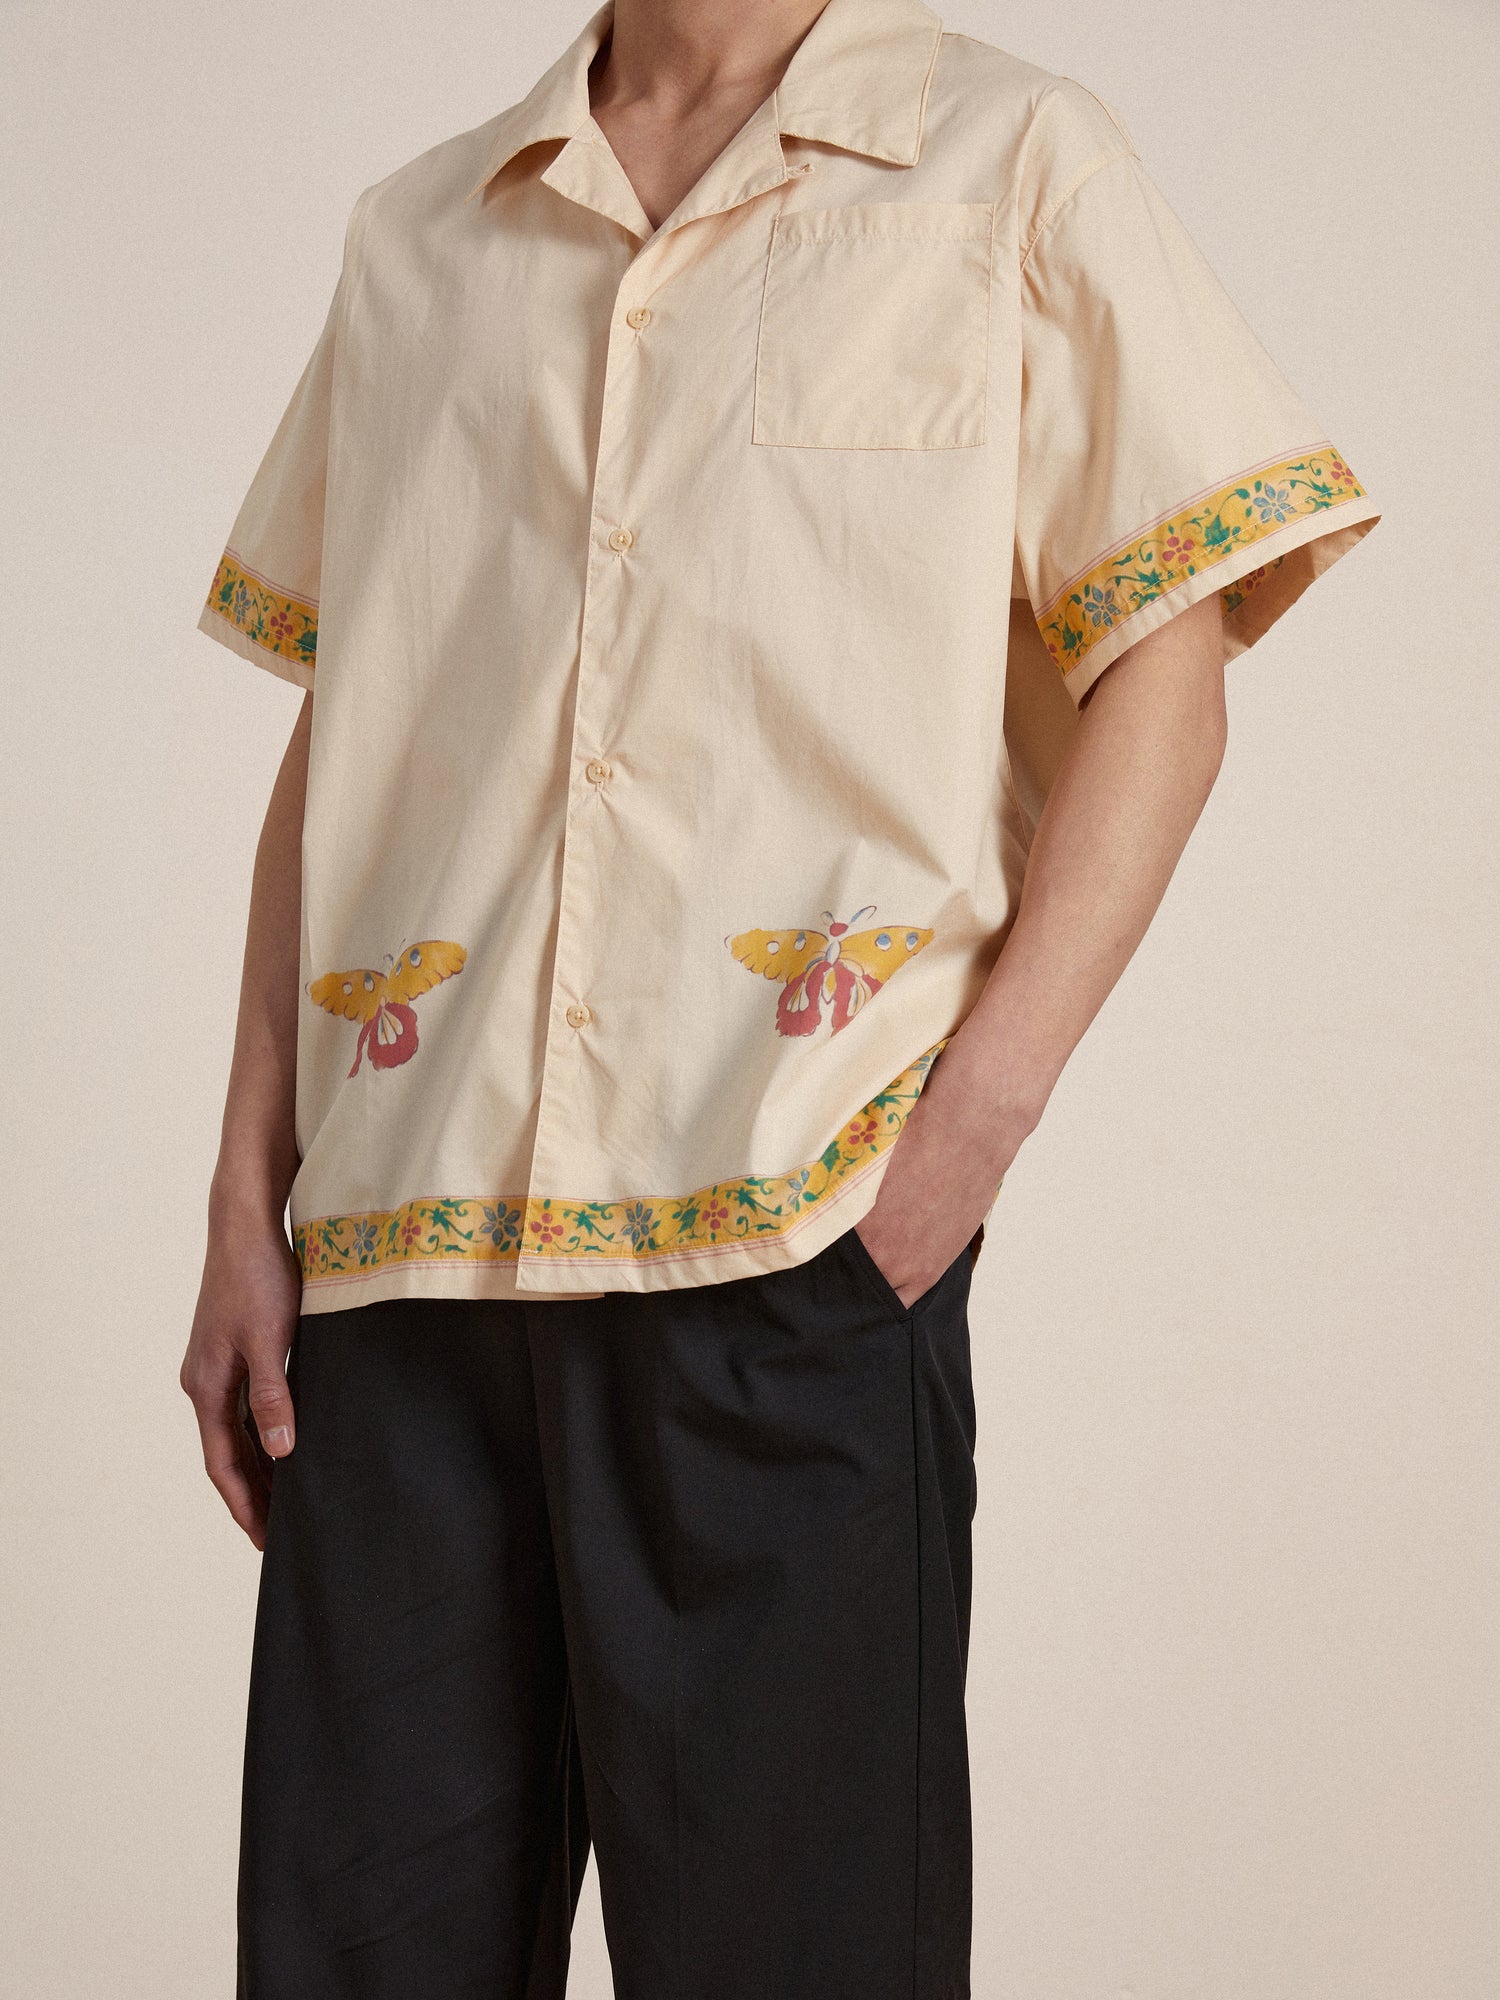 A man wearing a Found moth camp shirt with phulkari motifs.